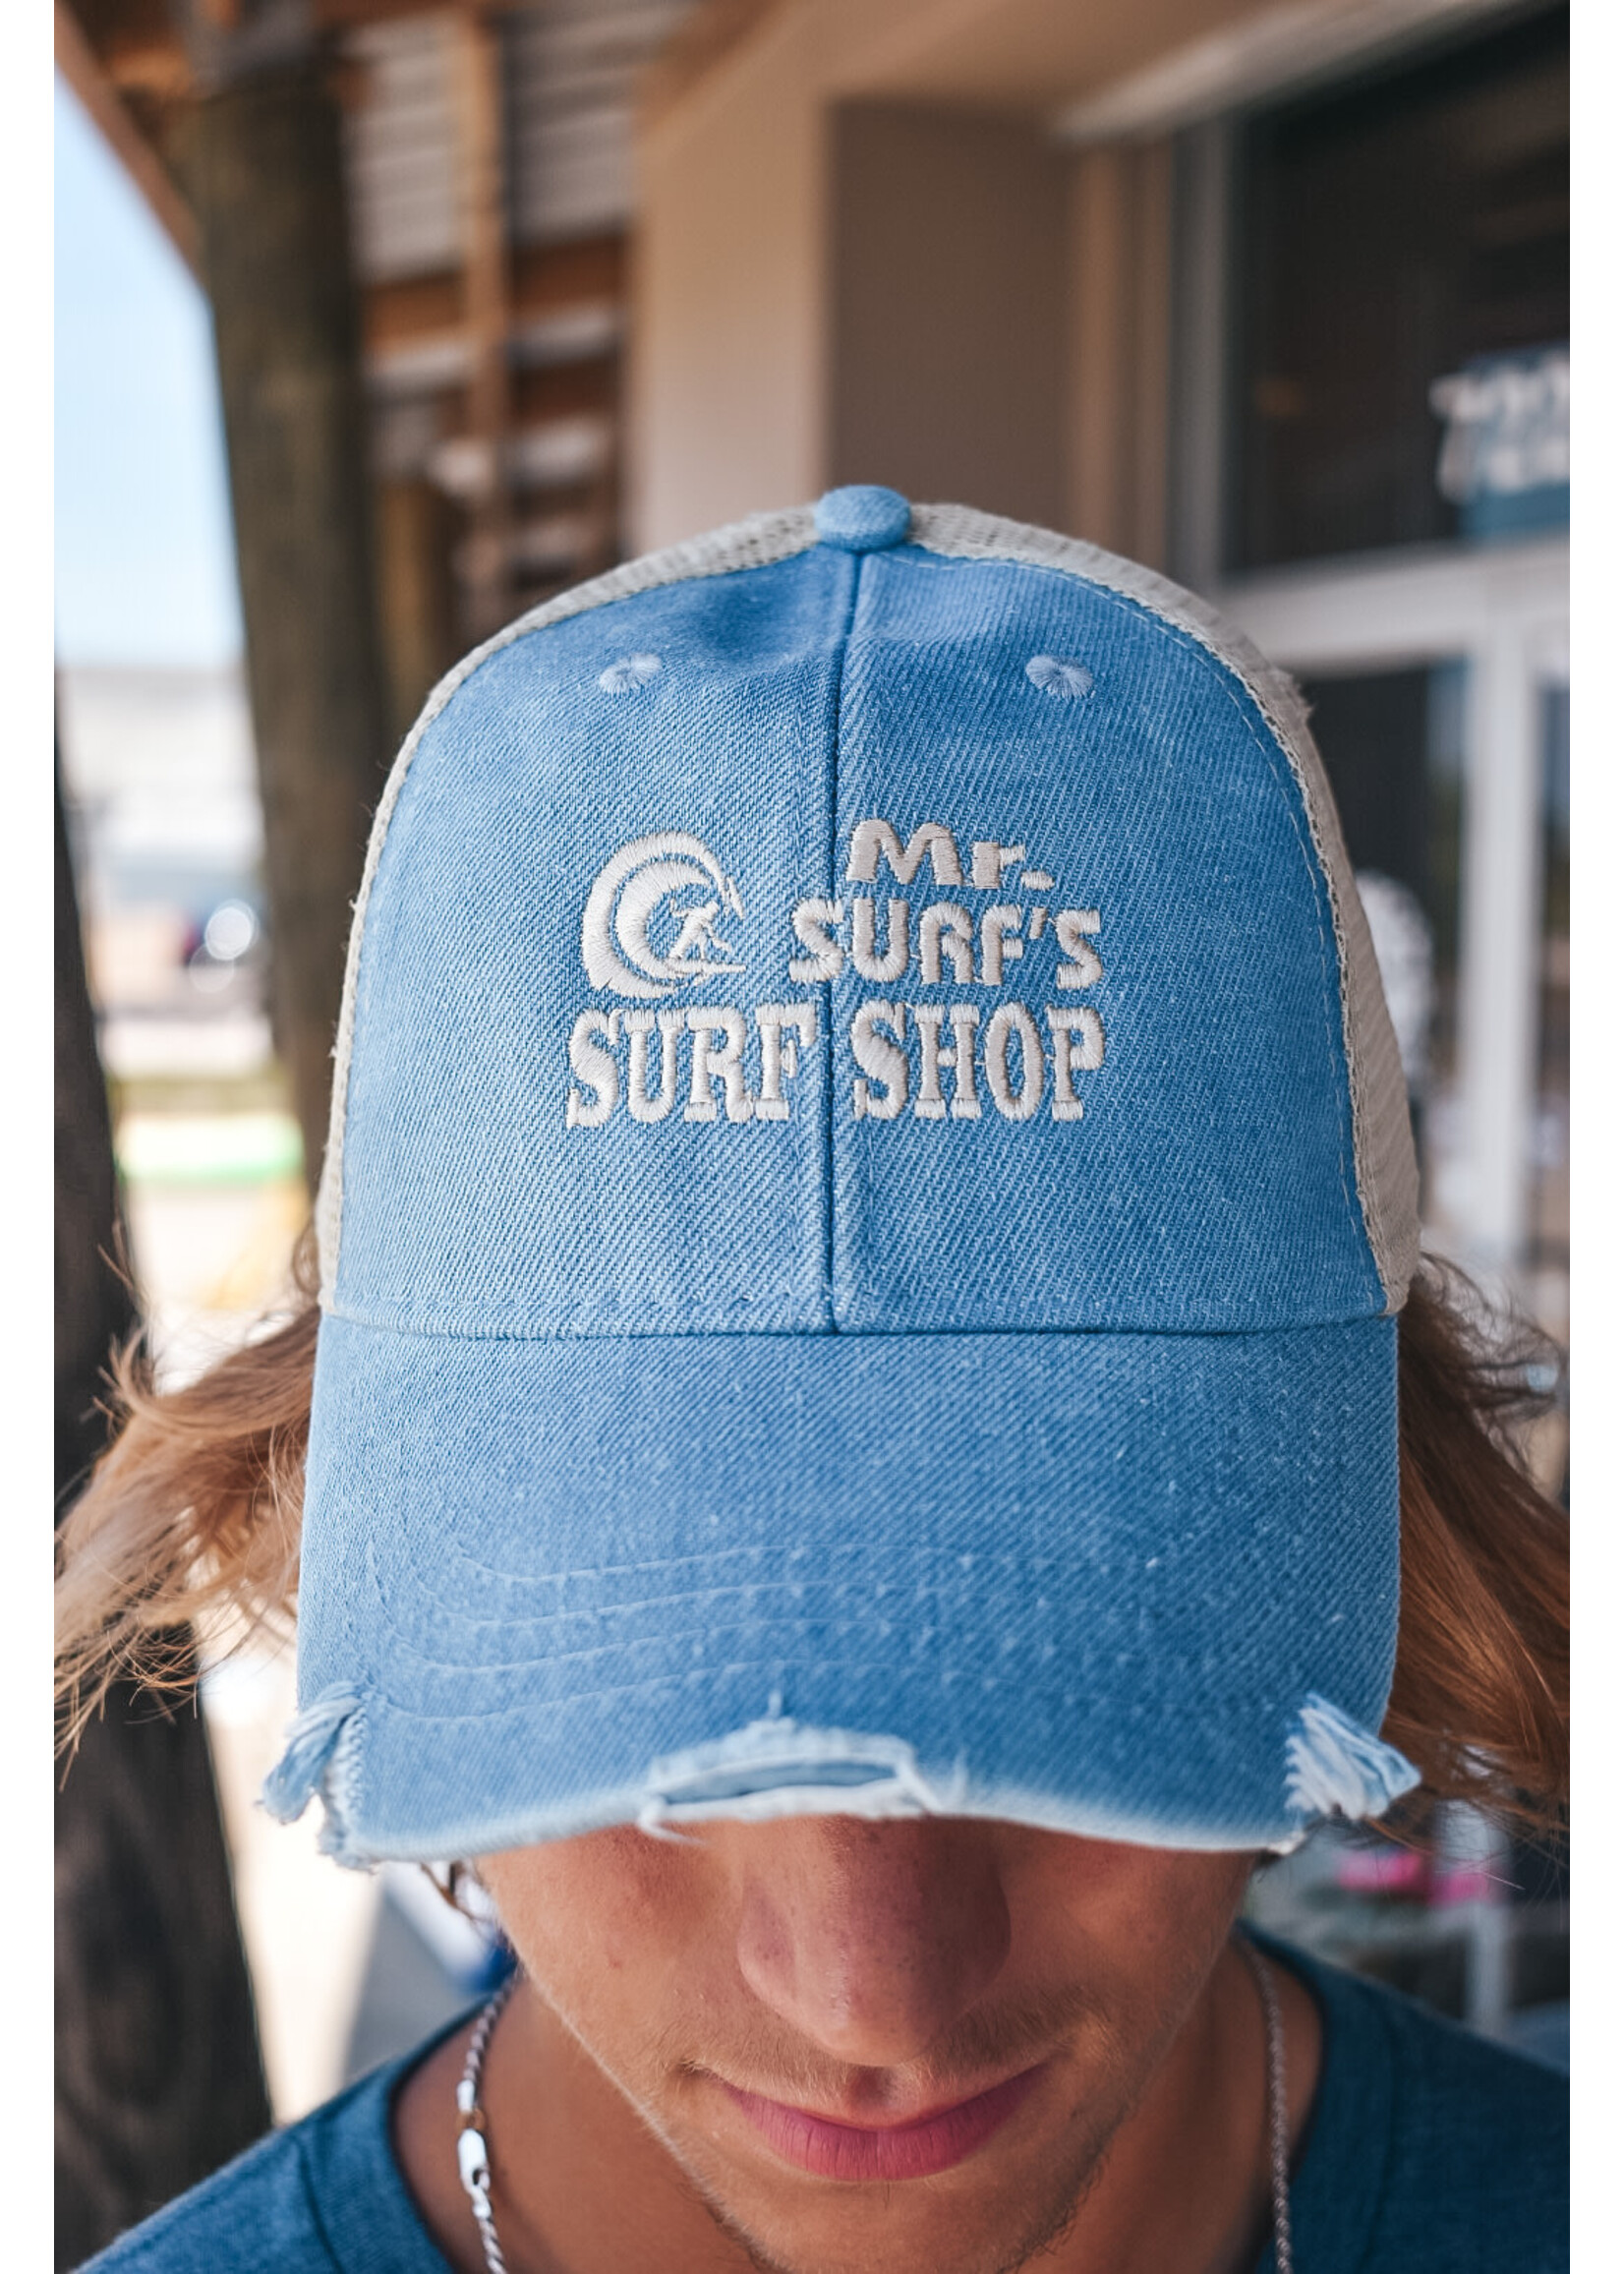 Mr Surfs Mr Surfs Mesh Back Hat